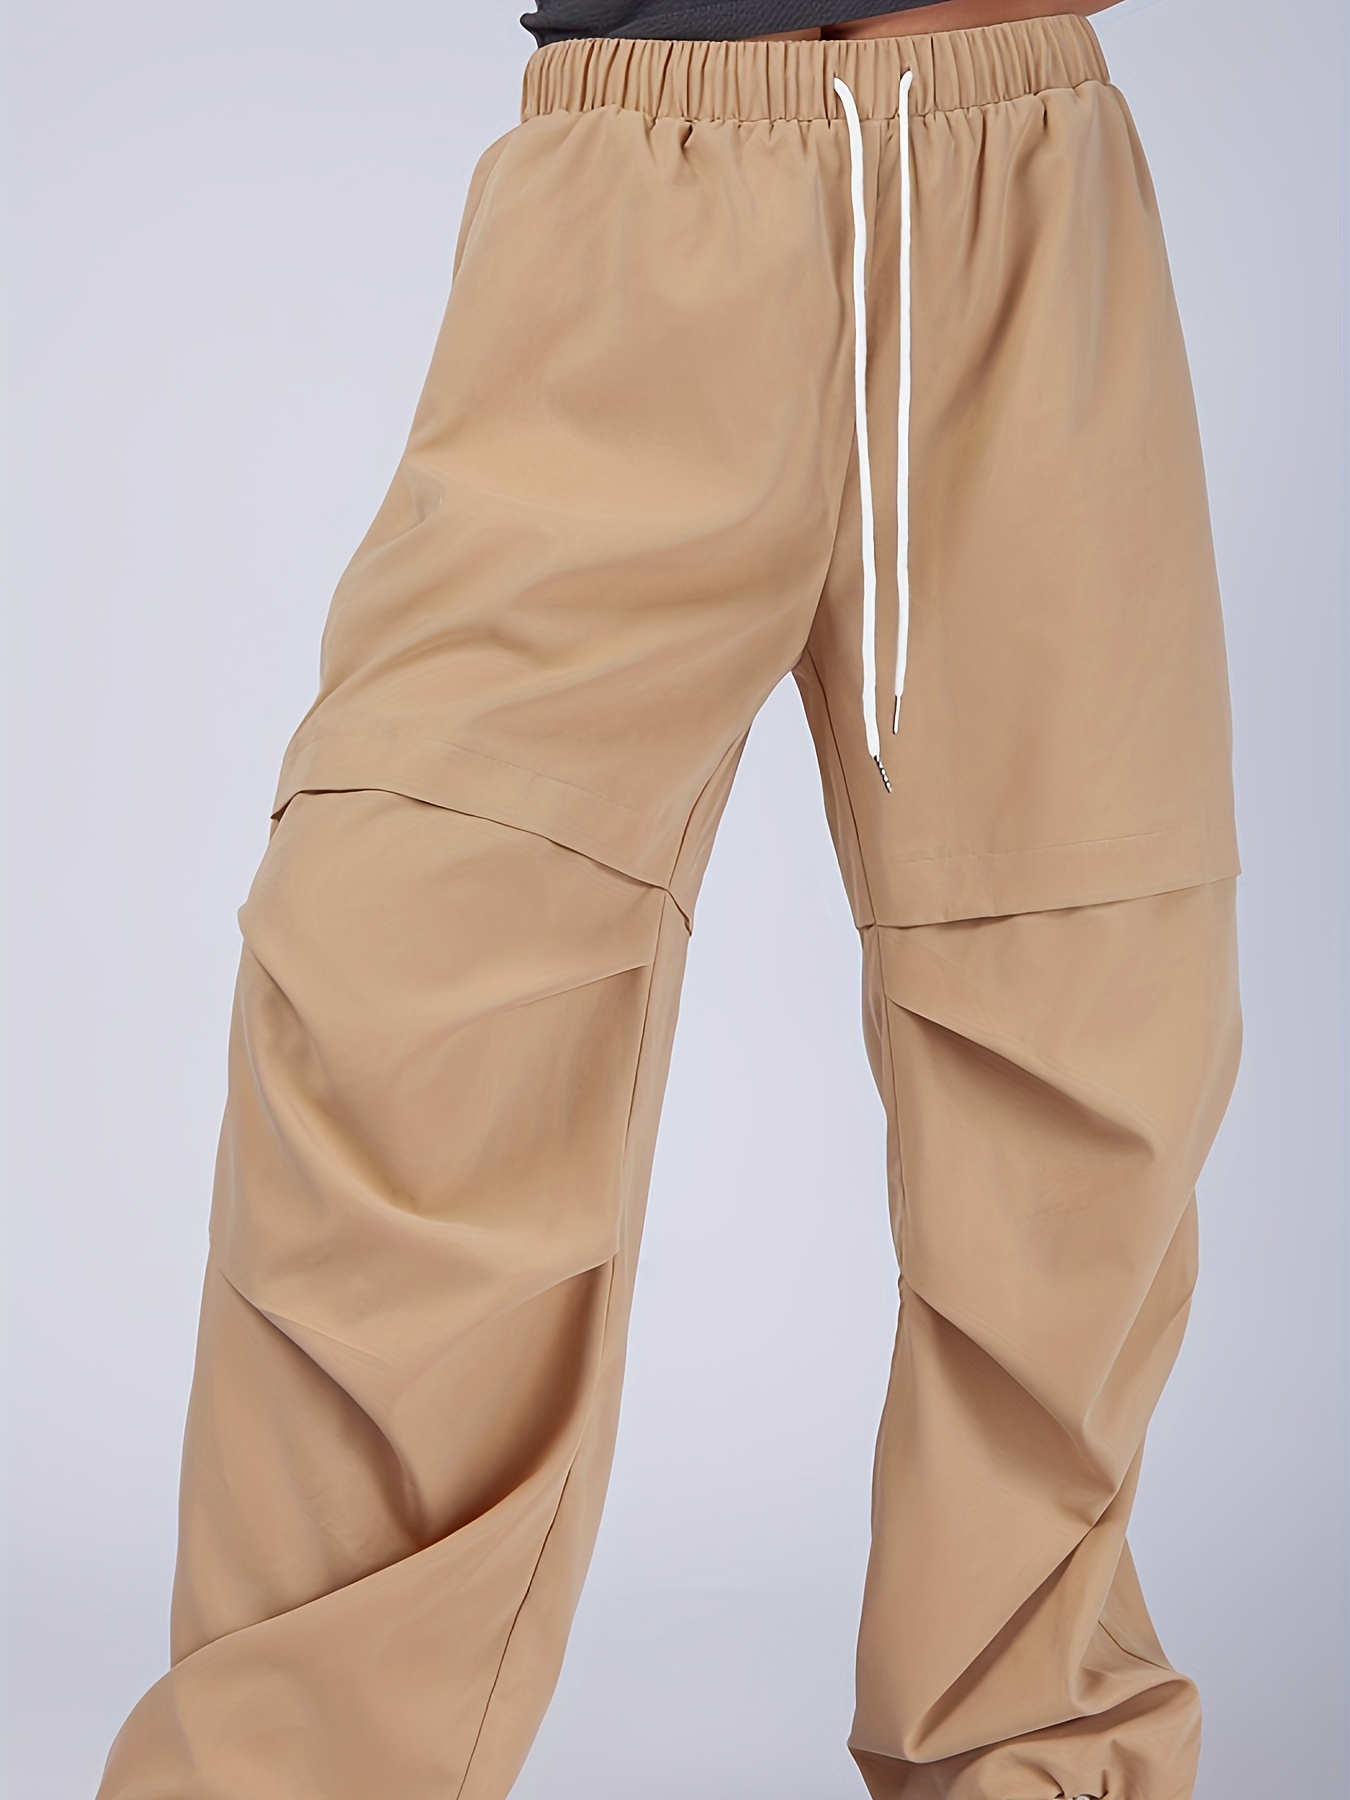 UTTOASFAY Clearance for Women Pants Fashion Women Plus Size Drawstring  Casual Solid Elastic Waist Pocket Loose Pants Rollbacks Khaki 16(Xxxxl)